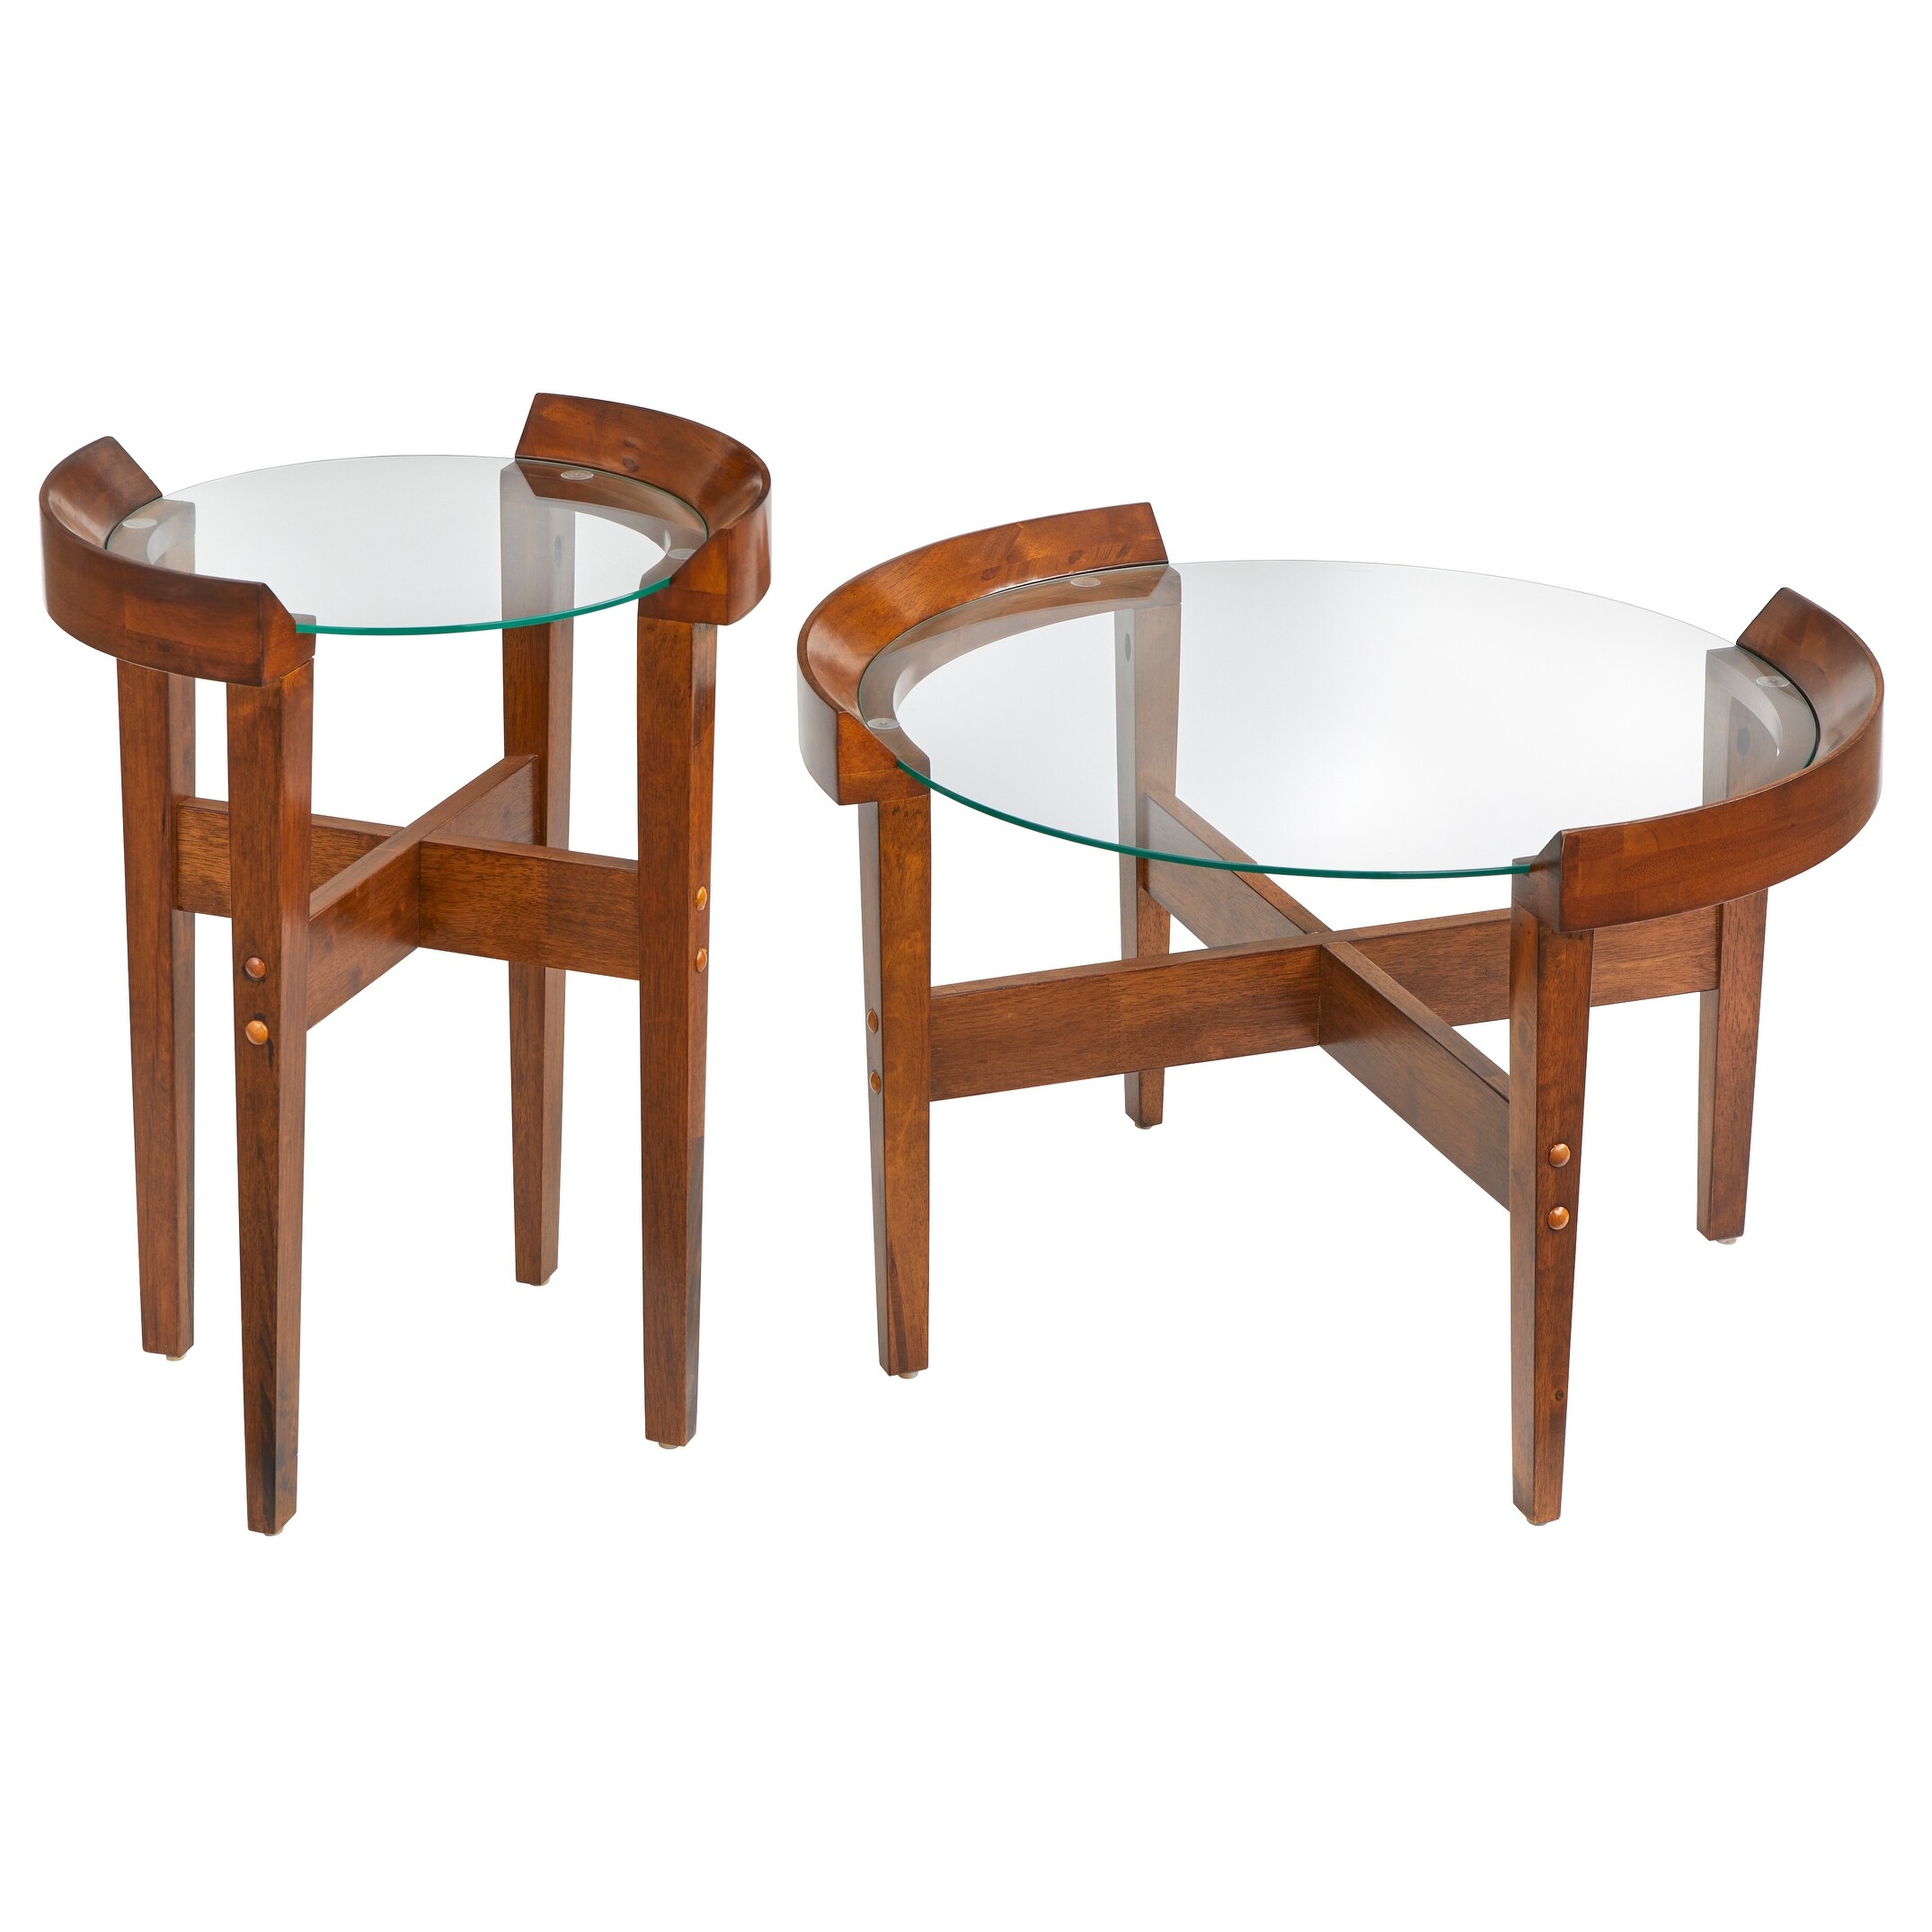 Lifestorey Dayton Solid Wood Coffee and End Table Set - Set of 2